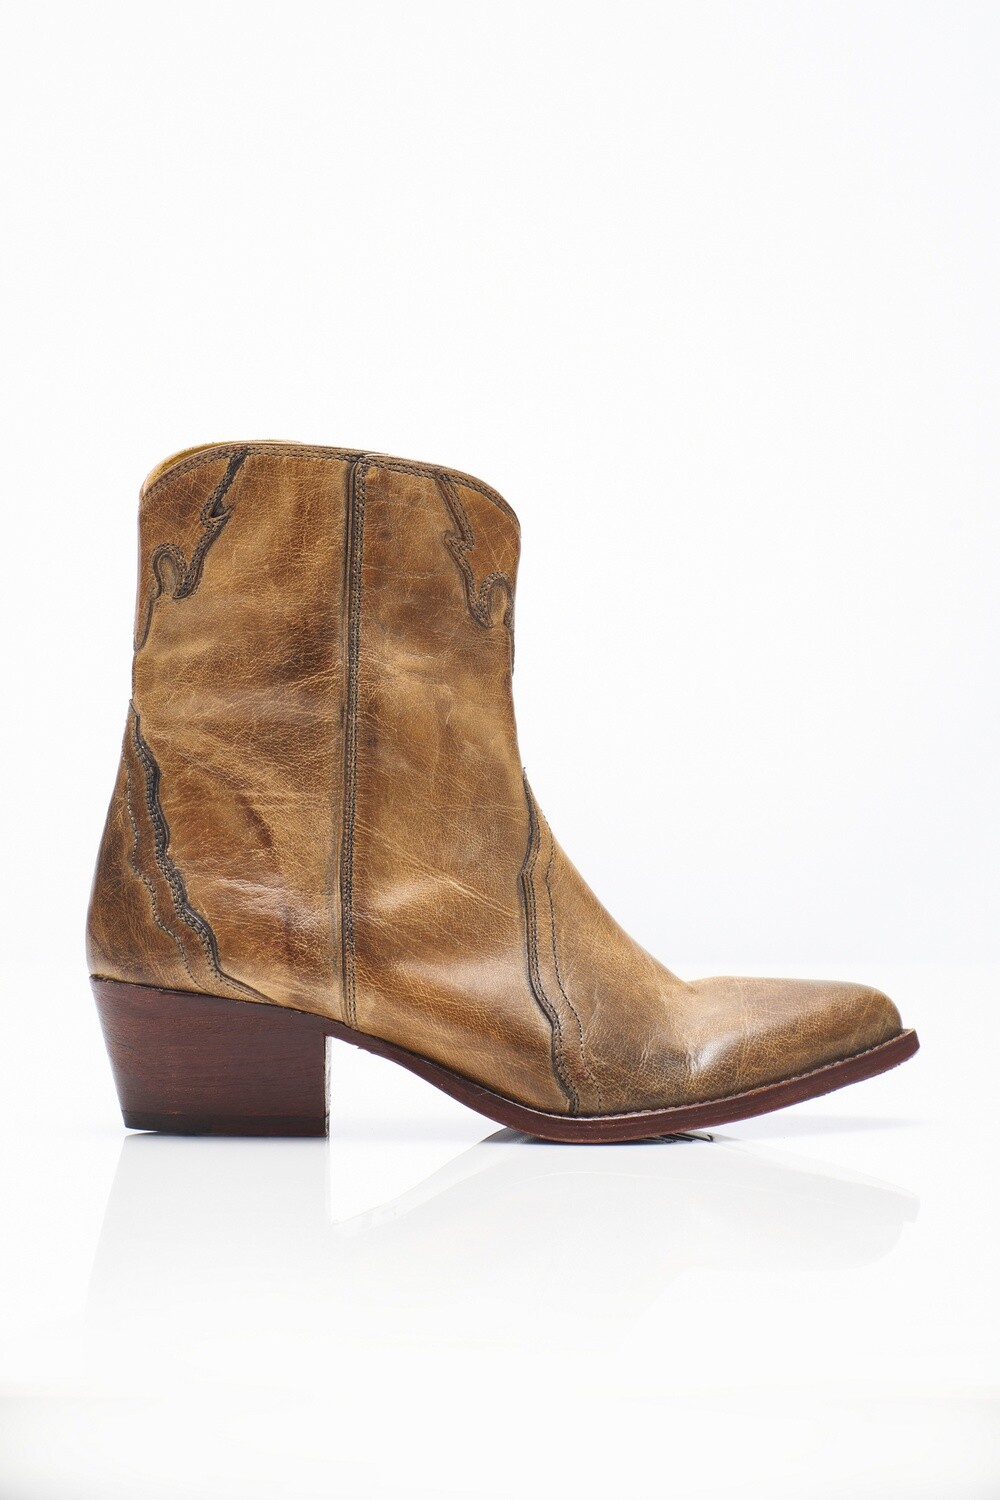 Purchase Wholesale women's western boots. Free Returns & Net 60